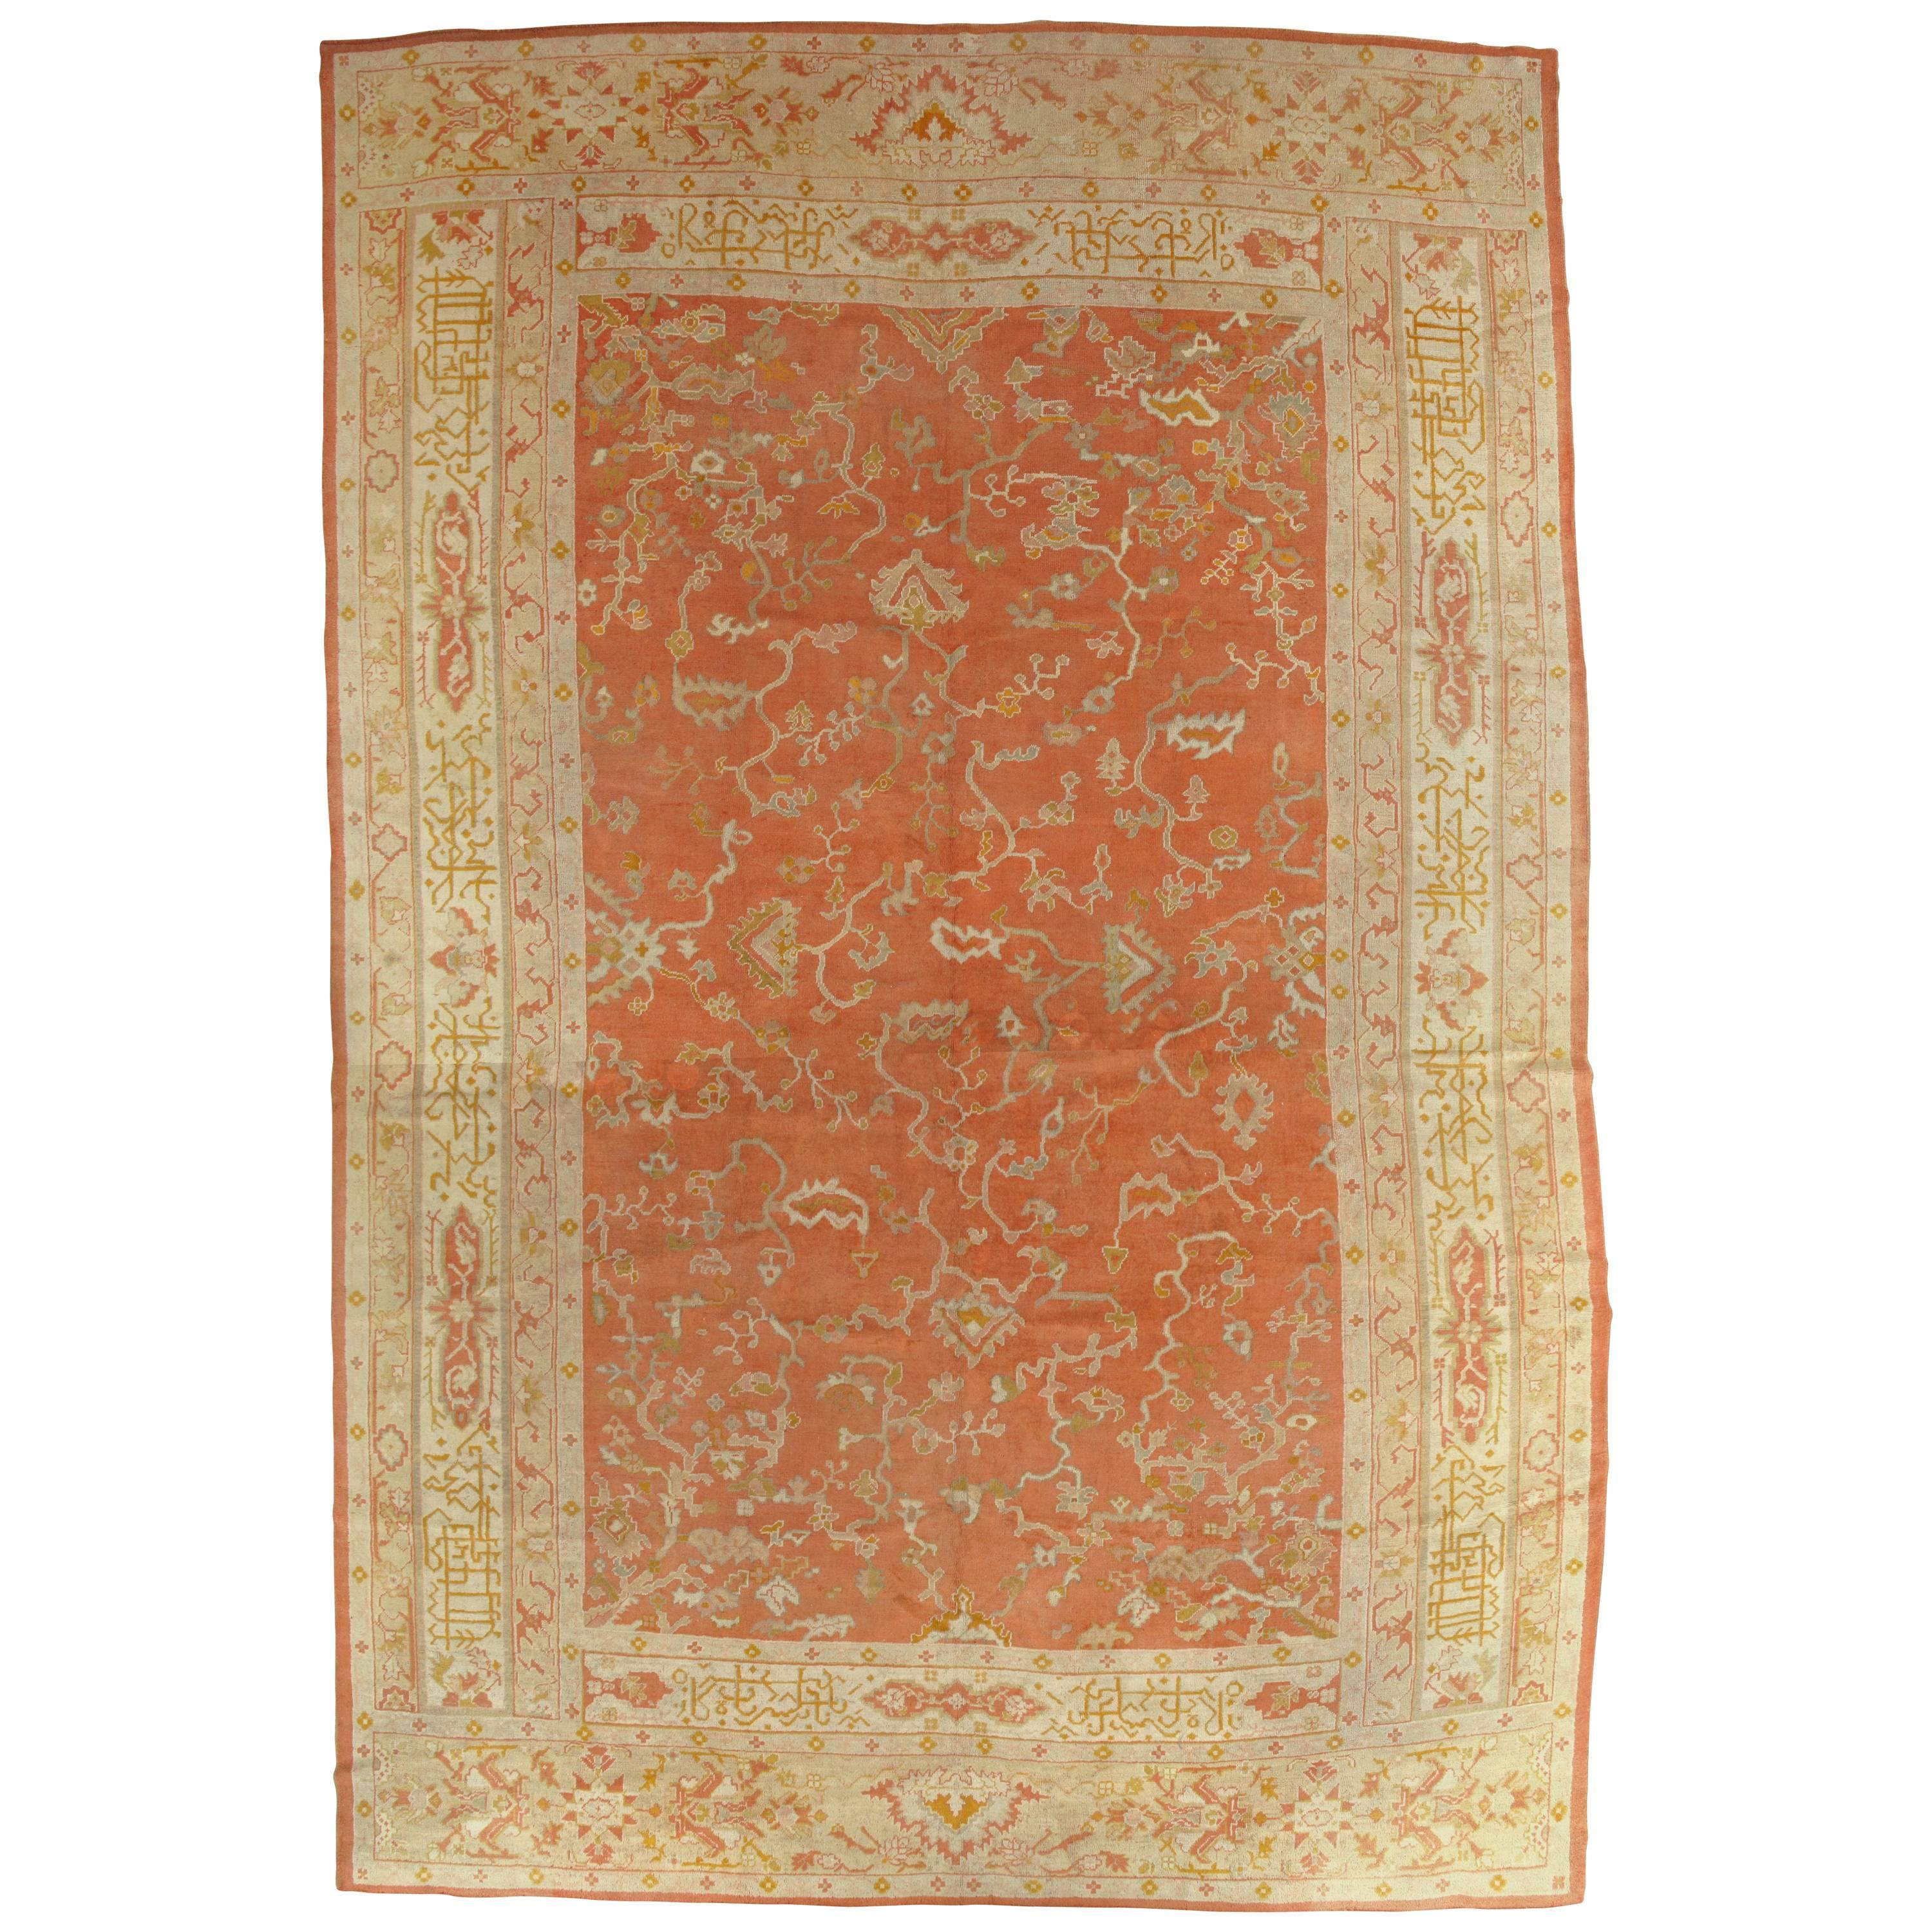 Antique Oushak Turkish Carpet, Handmade Coral, Ivory, Saffron